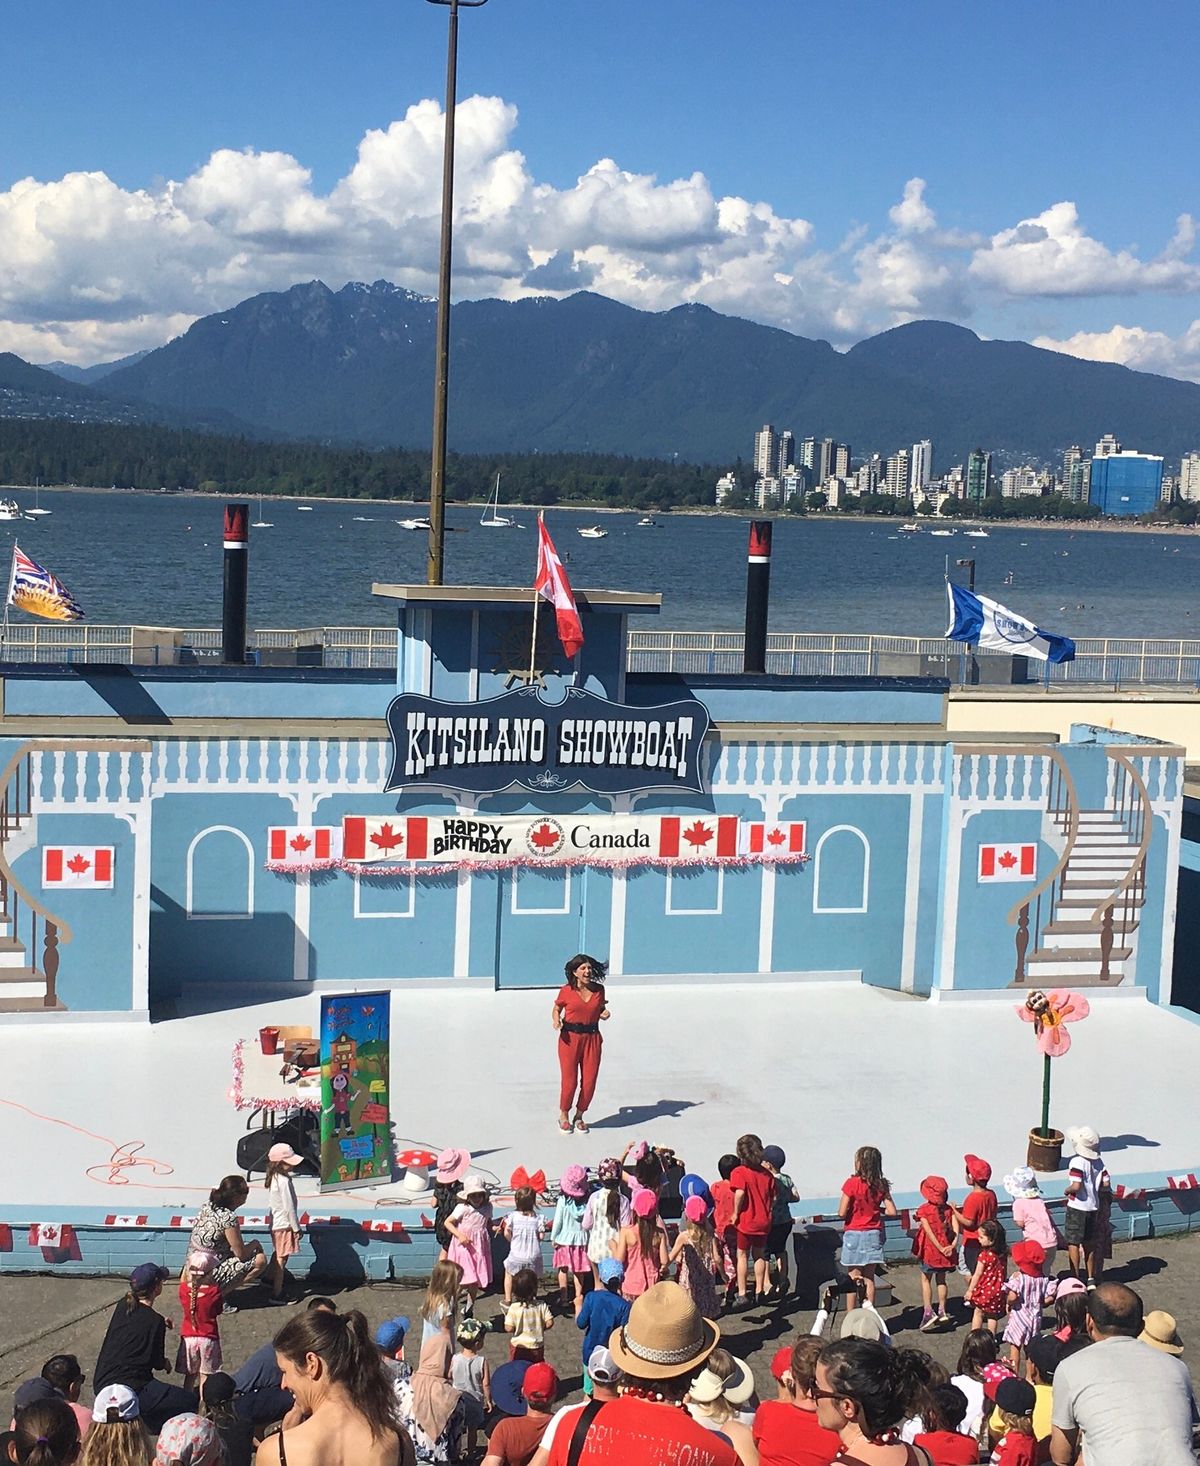 Canada Day at Kitsilano Showboat